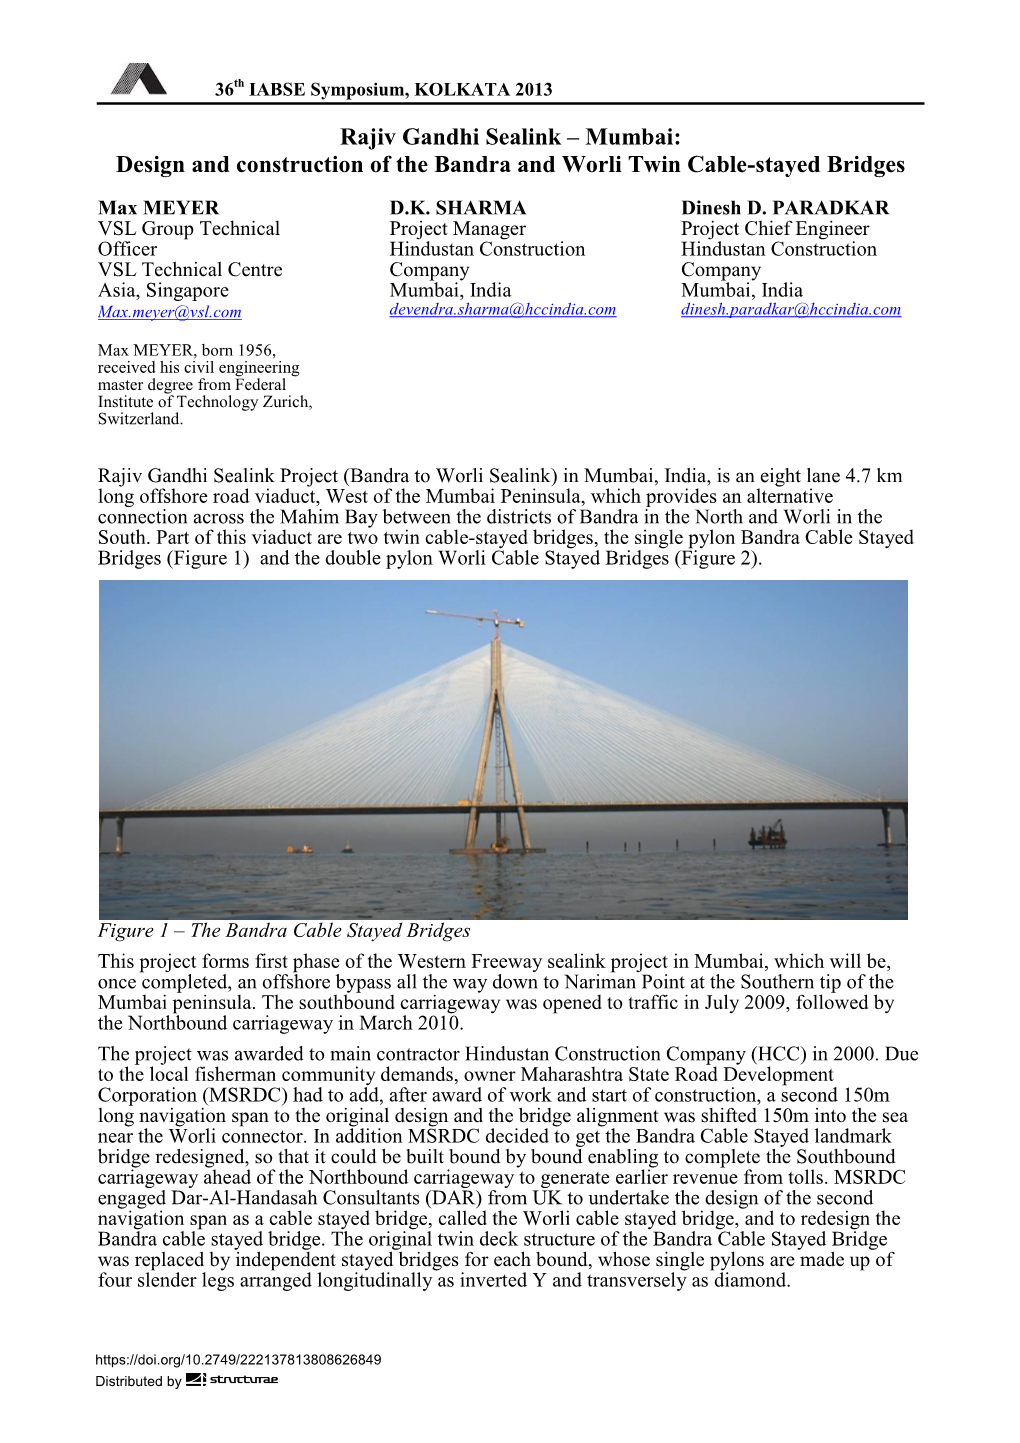 [PREVIEW] Rajiv Gandhi Sealink – Mumbai: Design and Construction Of